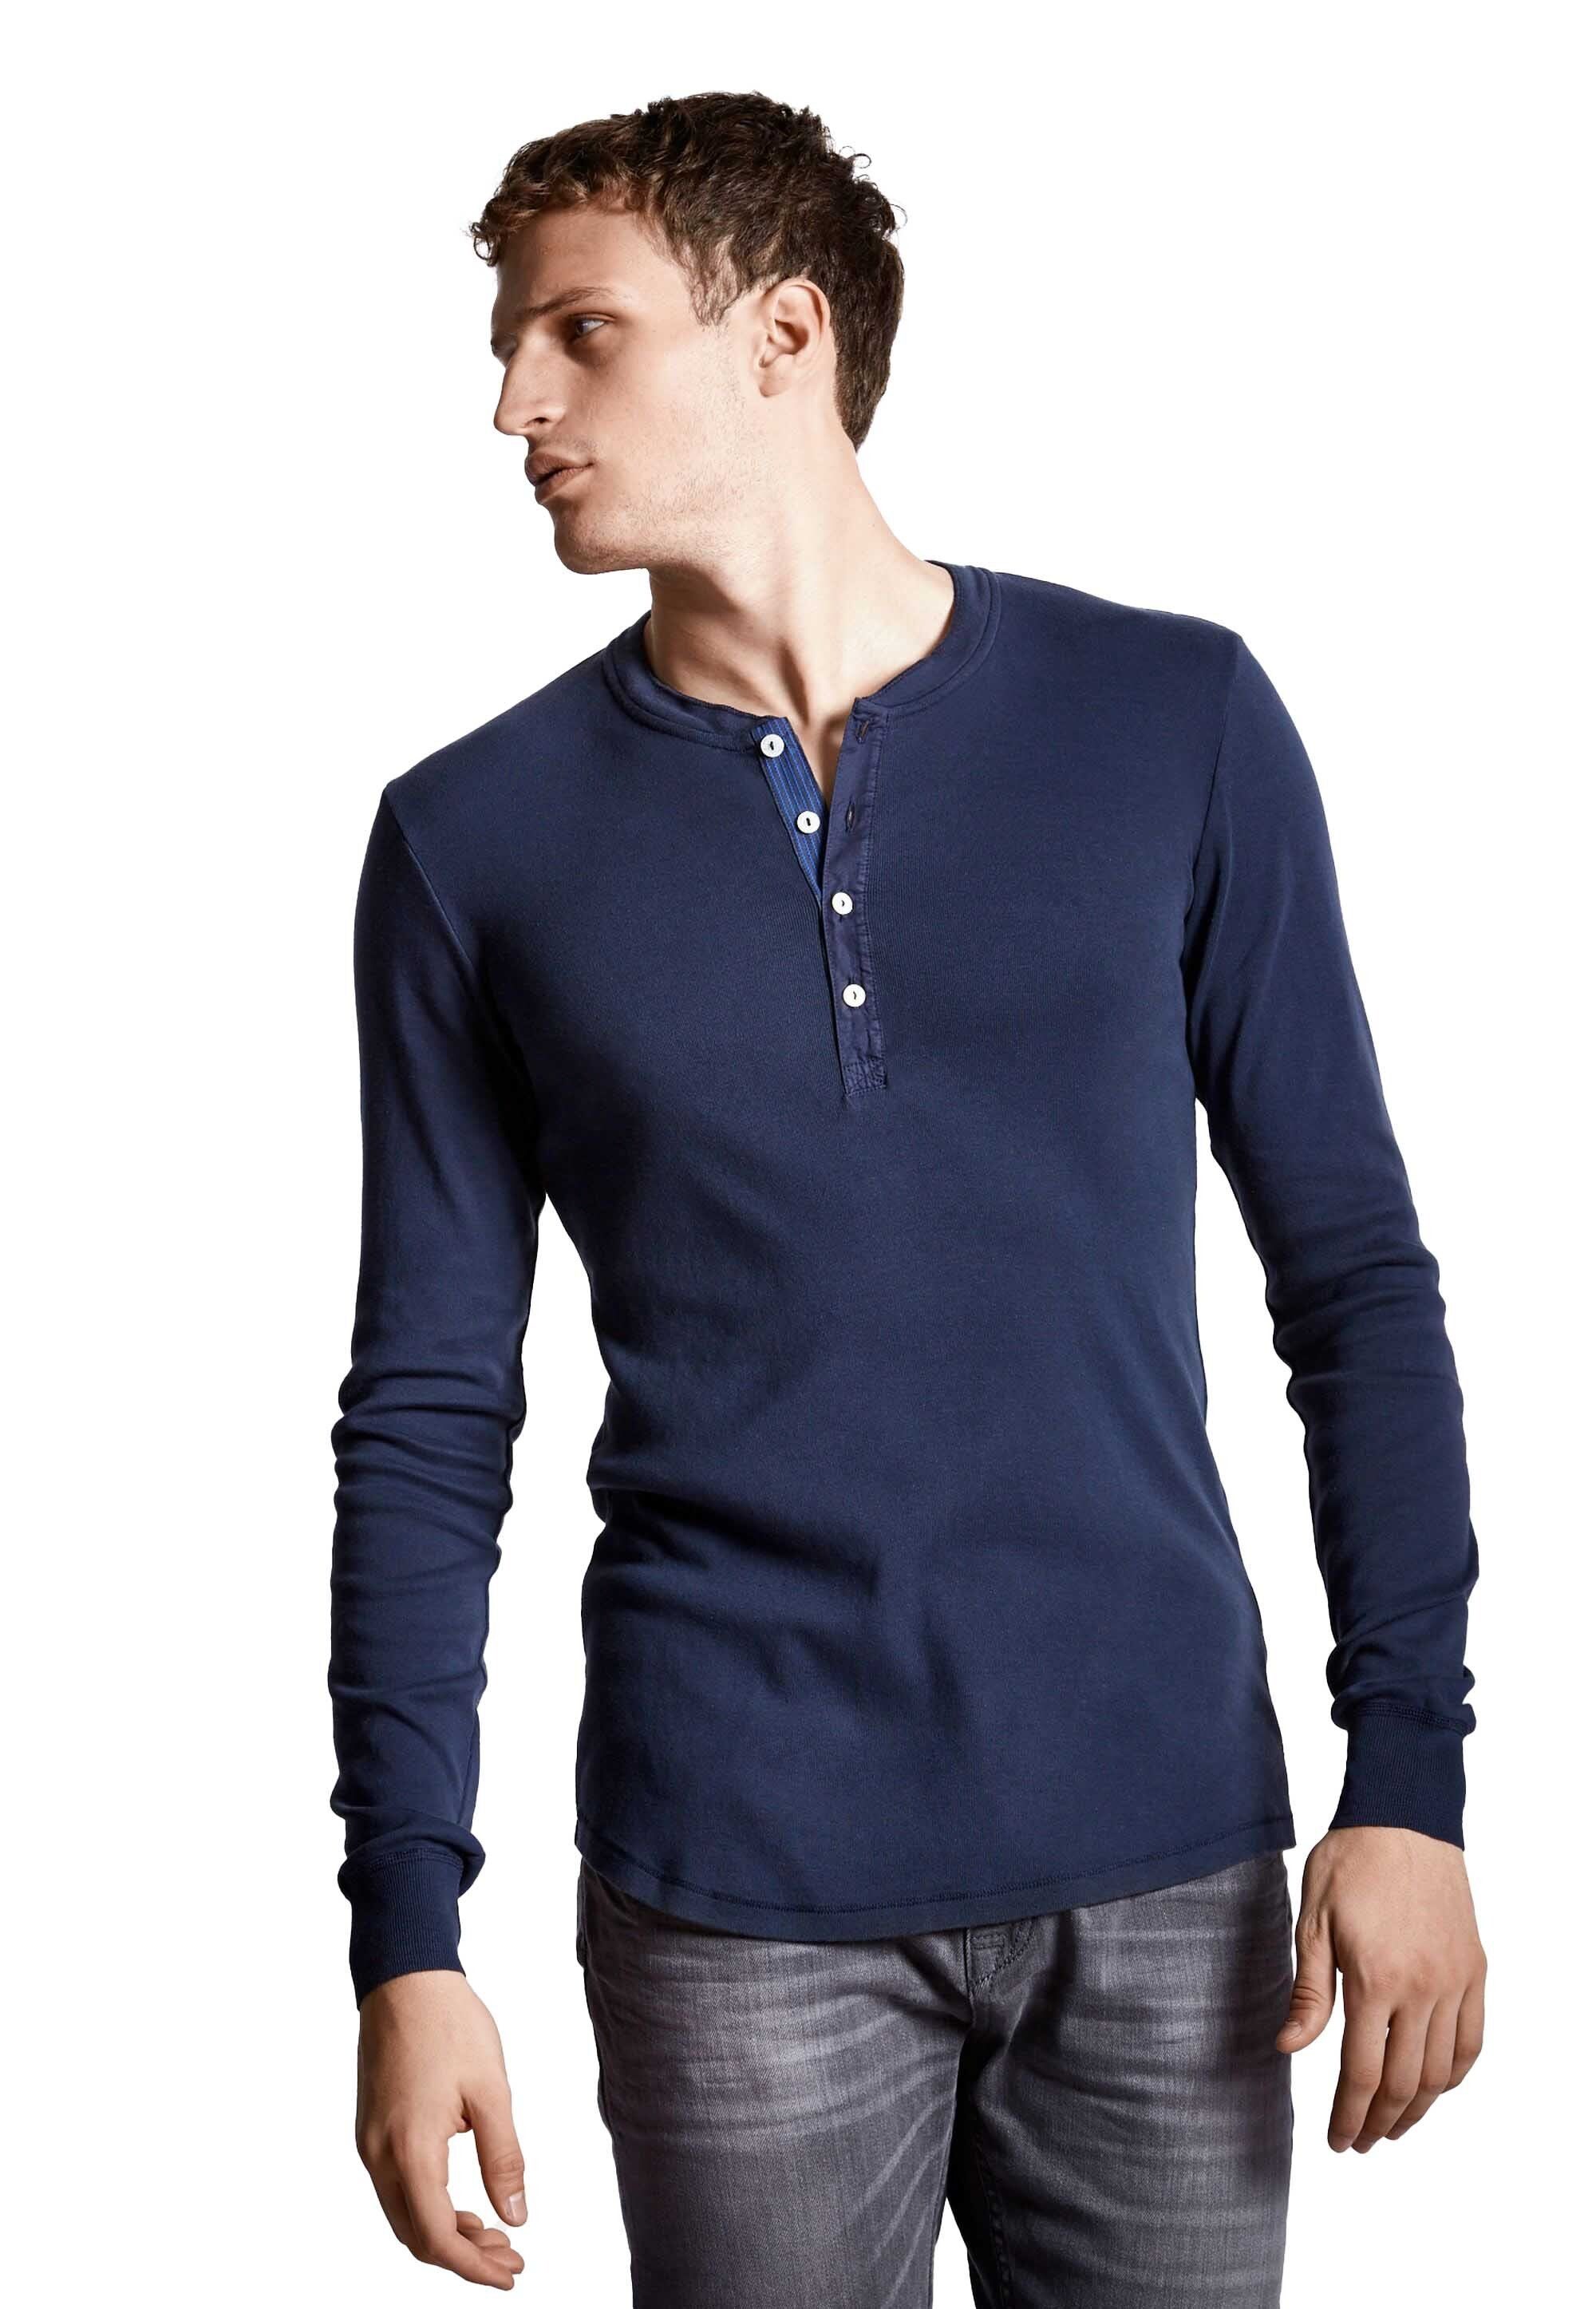 Langarm, Karl Heinz REVIVAL T-Shirt Herren - SCHIESSER Shirt Blau Unterhemd,